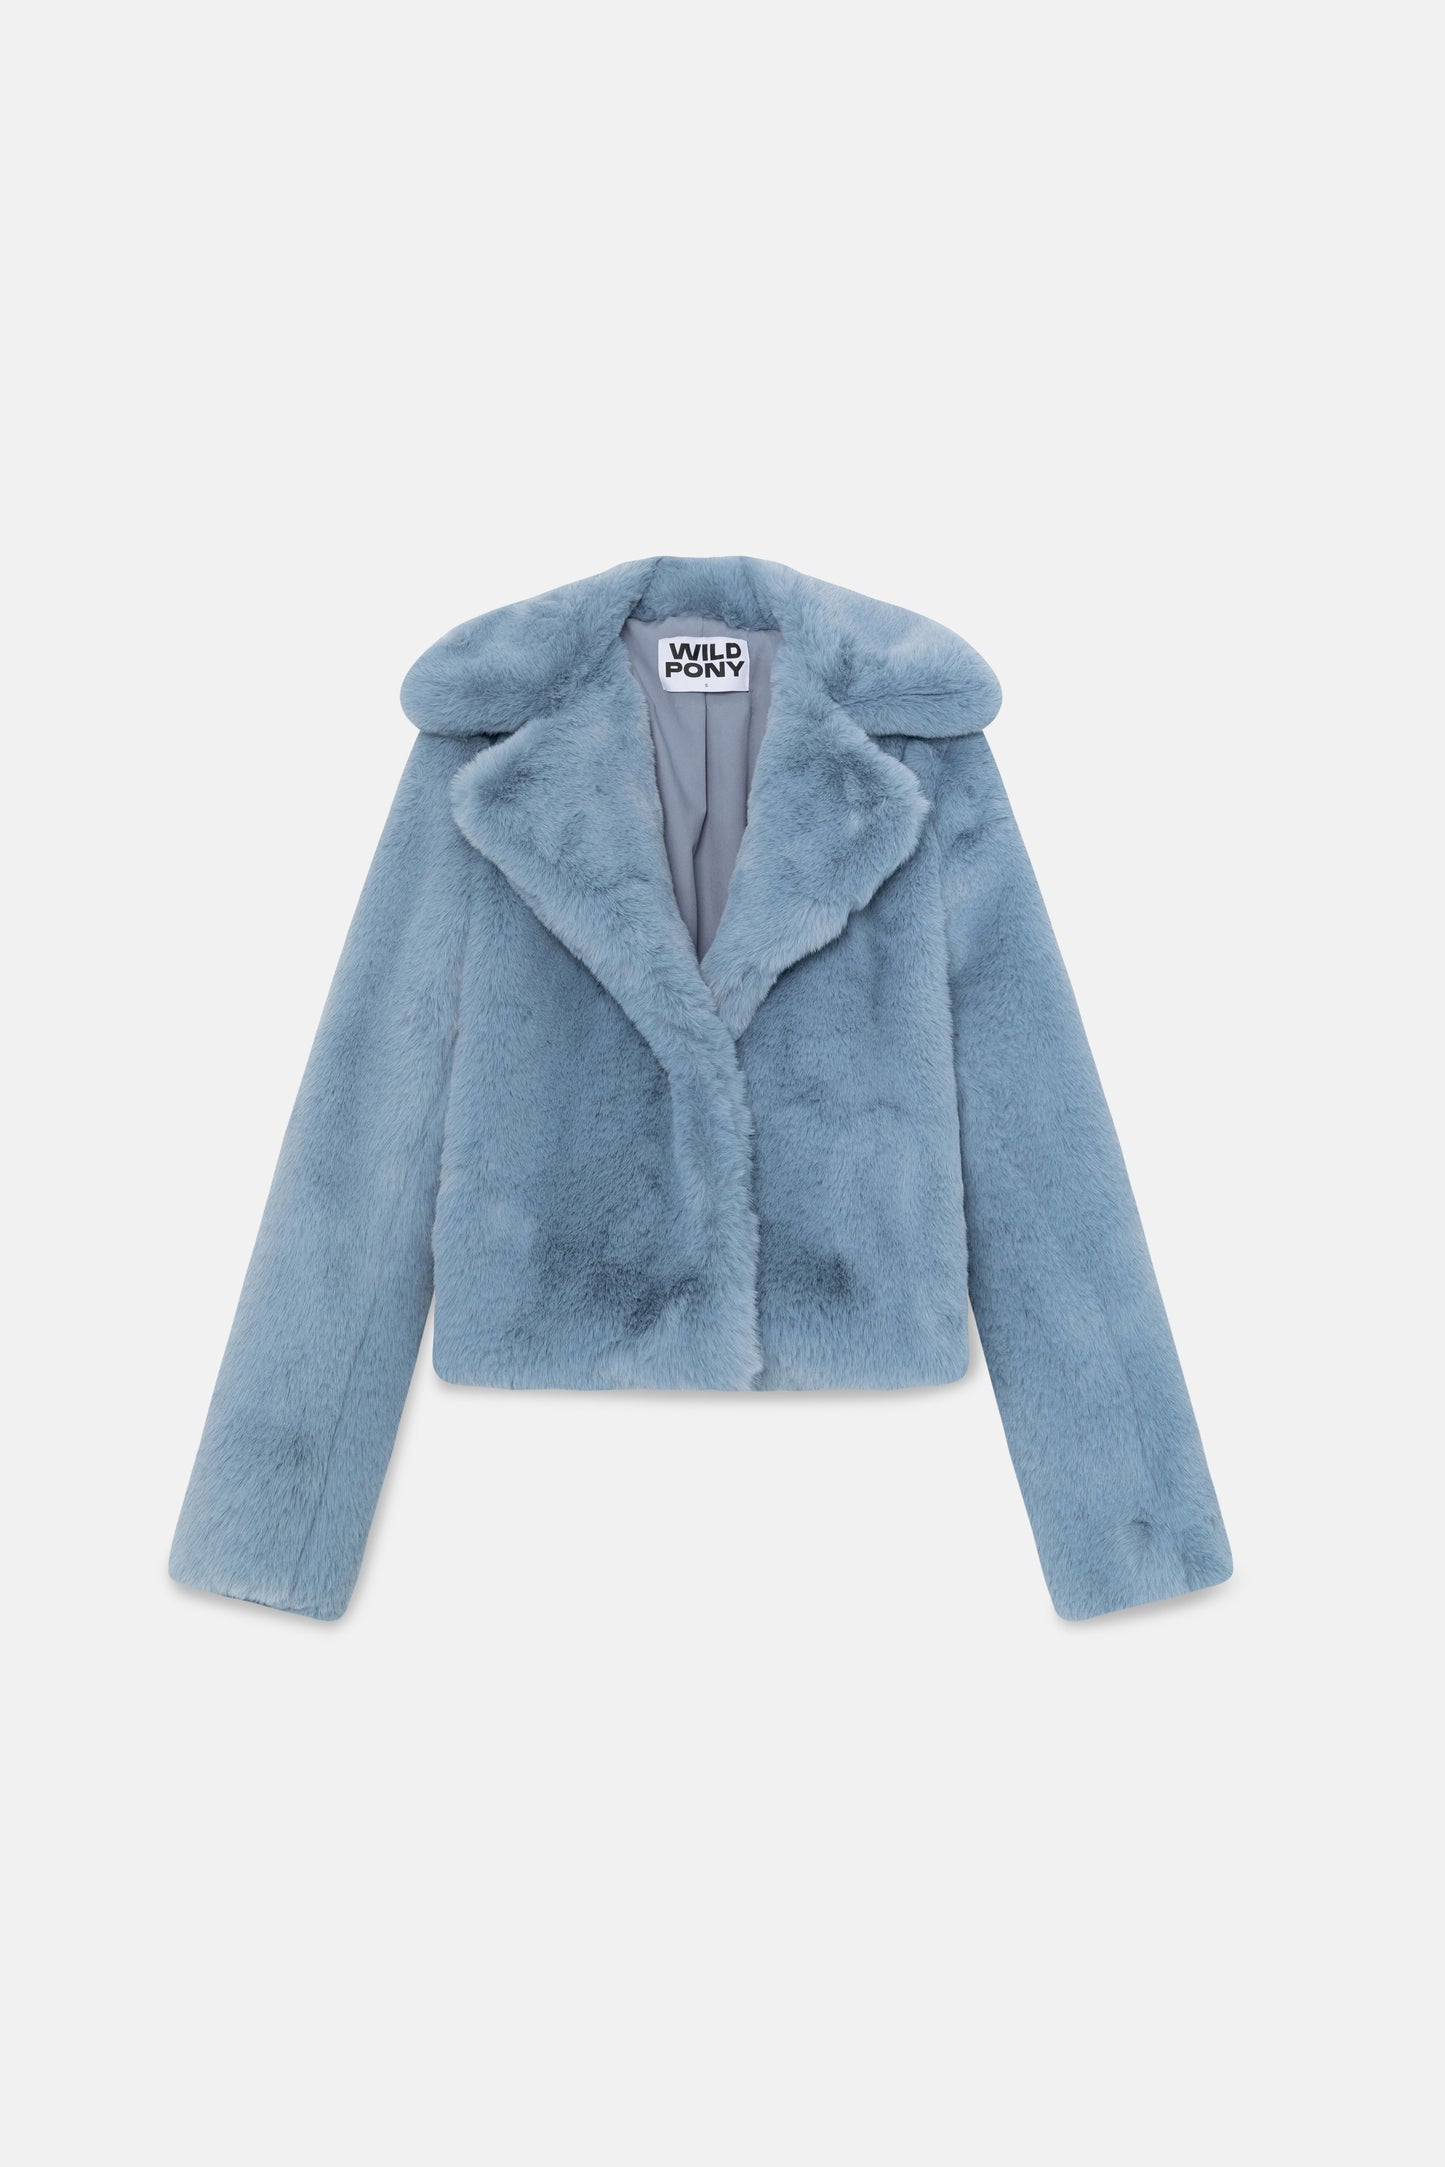 Short fur coat with blue lapel collar